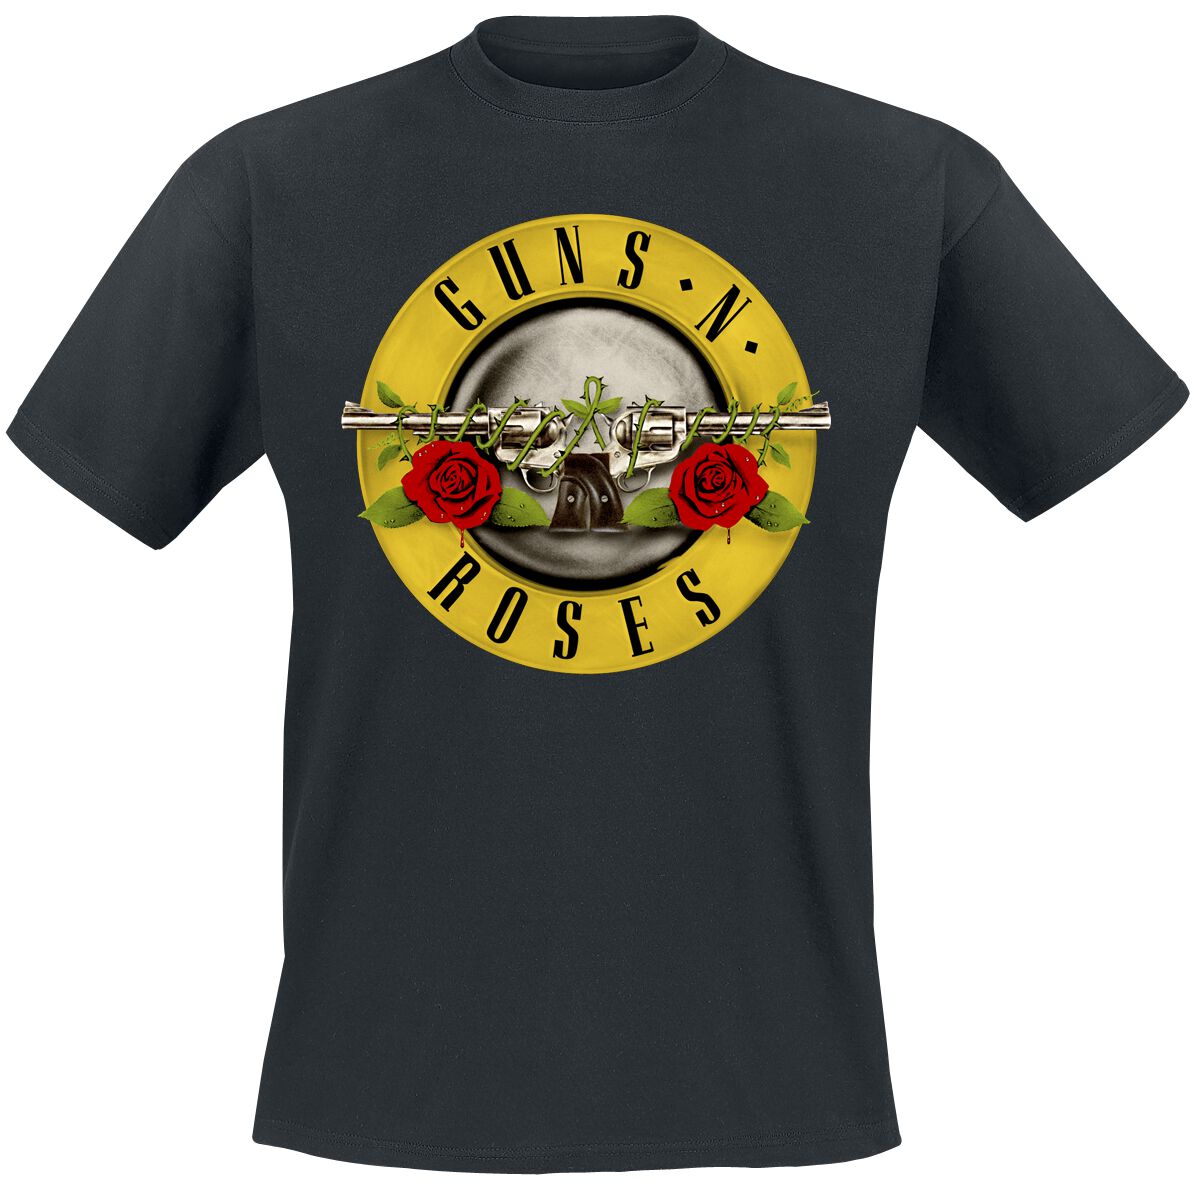 Guns N' Roses Distressed Bullet T-Shirt schwarz in S